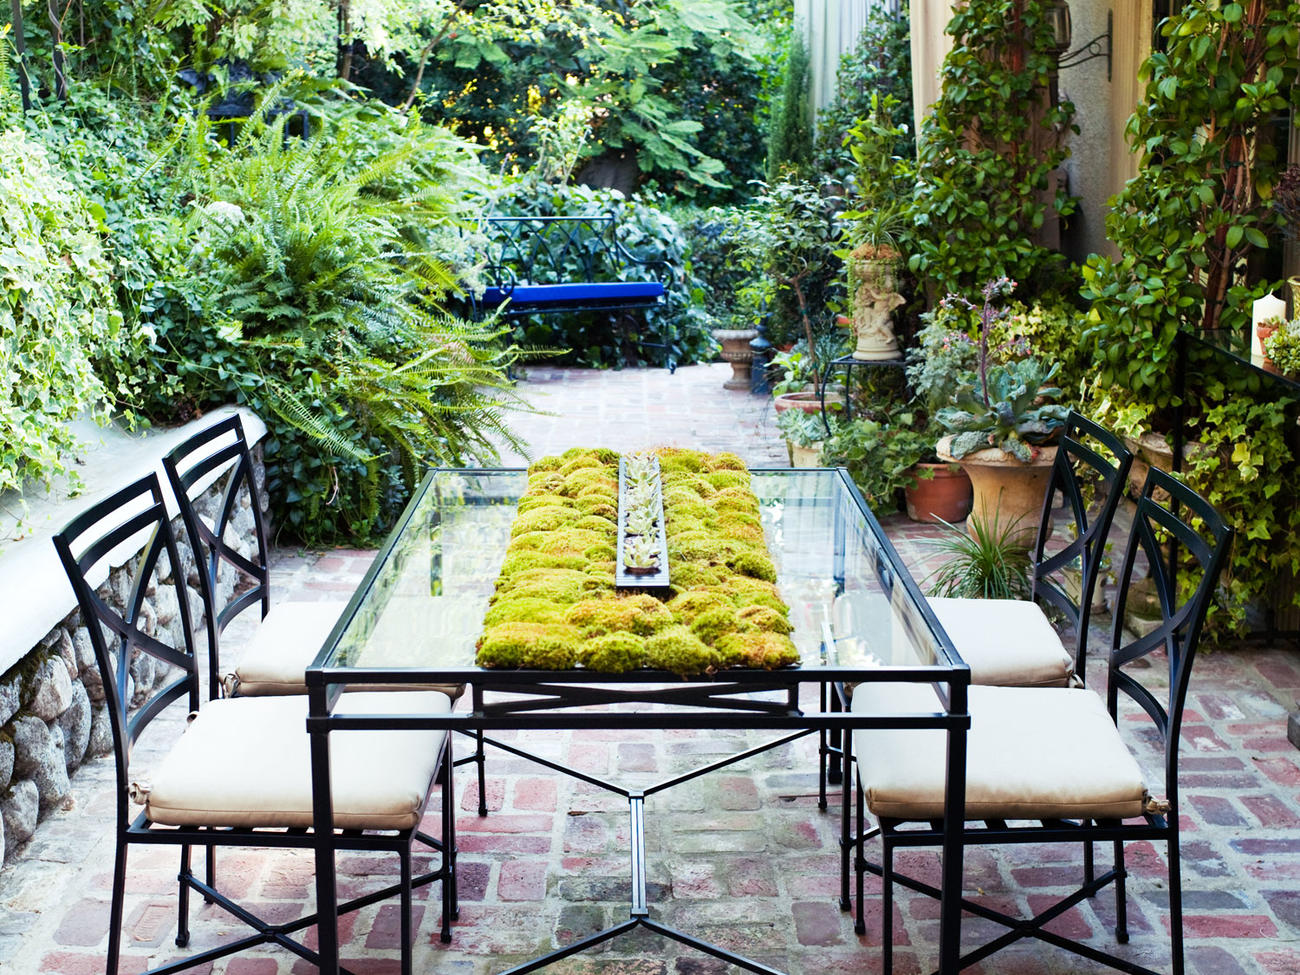 Make Your Own Tabletop Garden